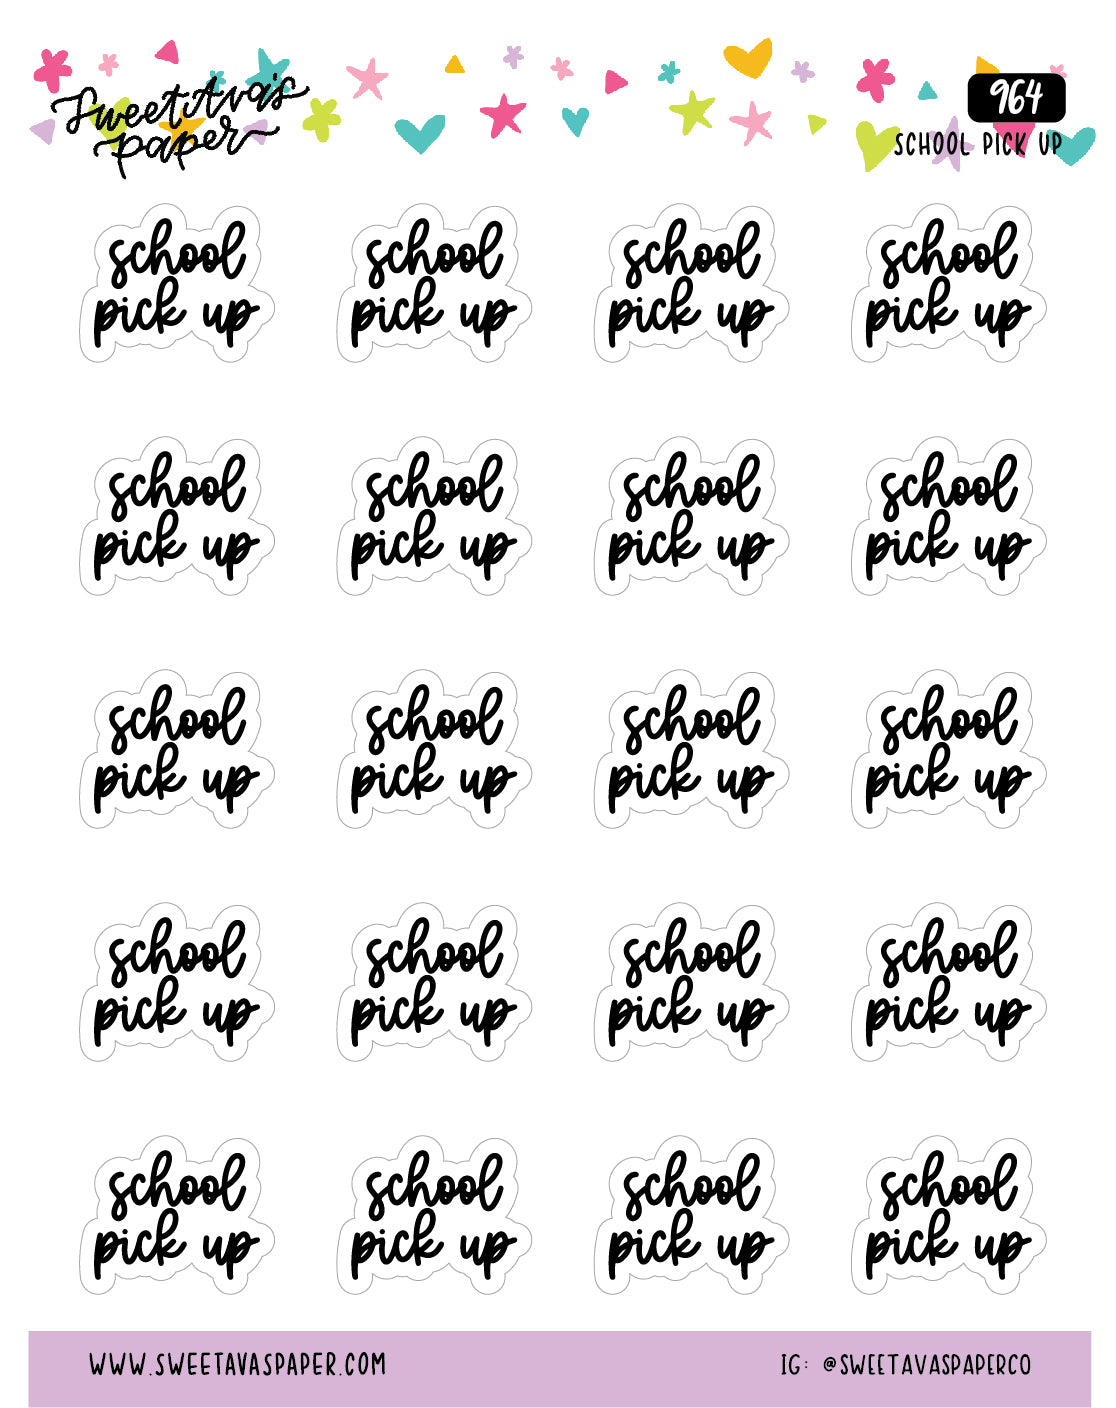 School Pick Up Planner Stickers - Script / Text - [964]